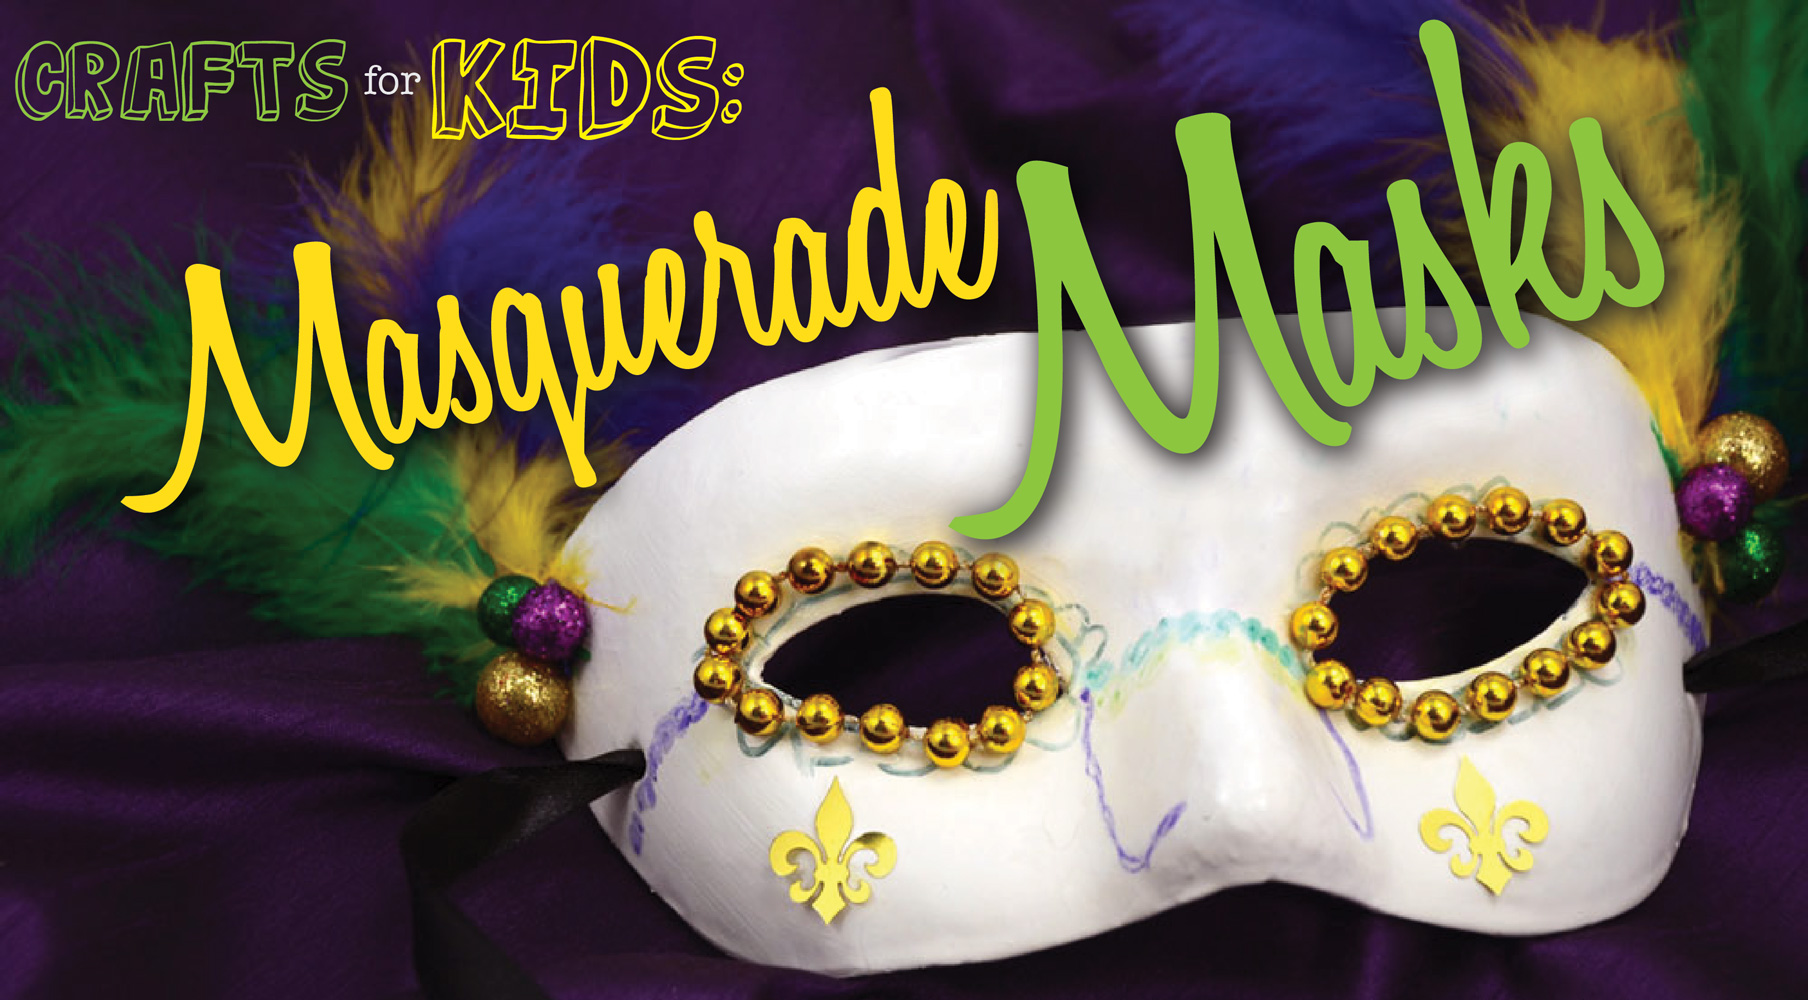 Crafts for Kids: Masquerade Masks